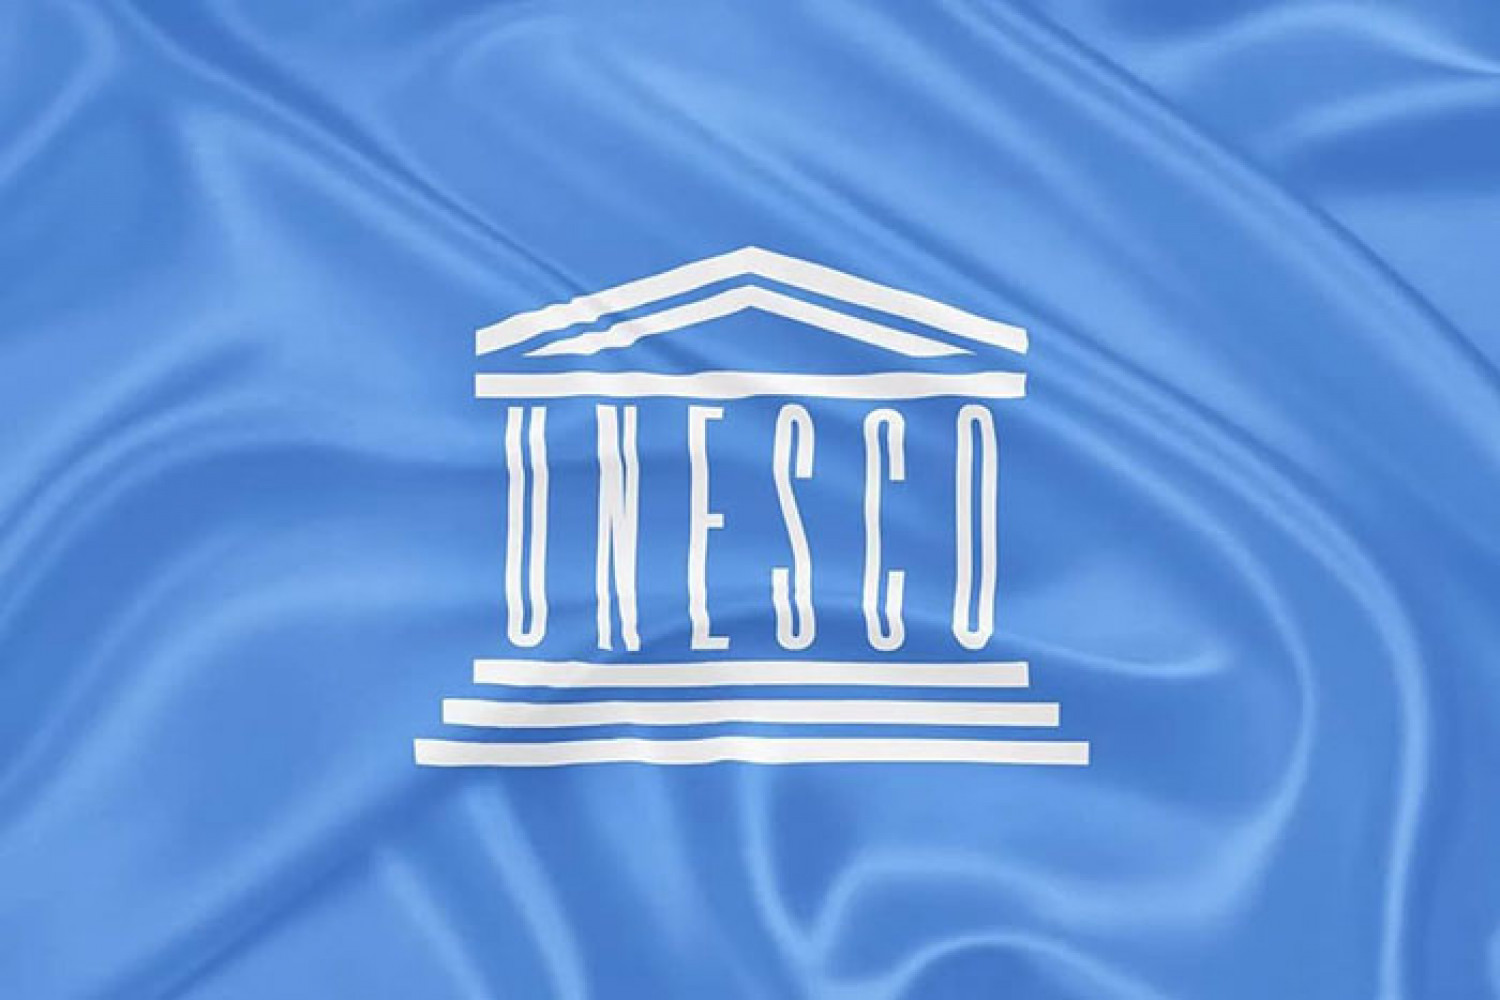 Whc unesco. ЮНЕСКО. Флаг ЮНЕСКО. Символ ЮНЕСКО.